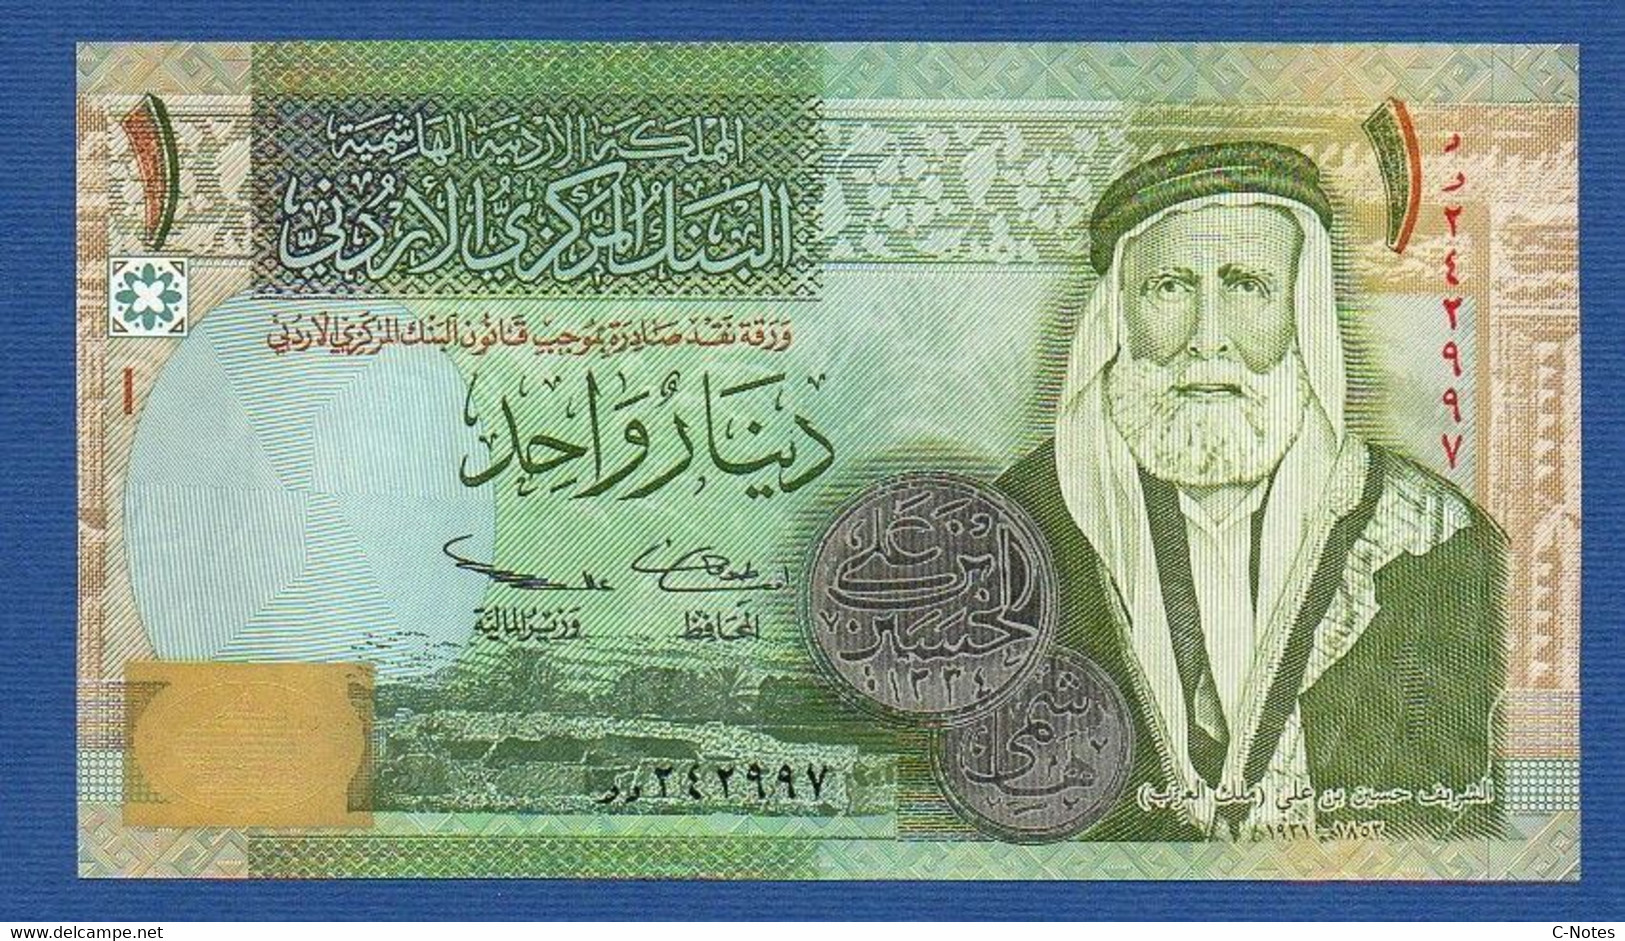 JORDAN - P.34b  – 1 Dinar 2005 UNC, Serial/n See Photos - Jordan